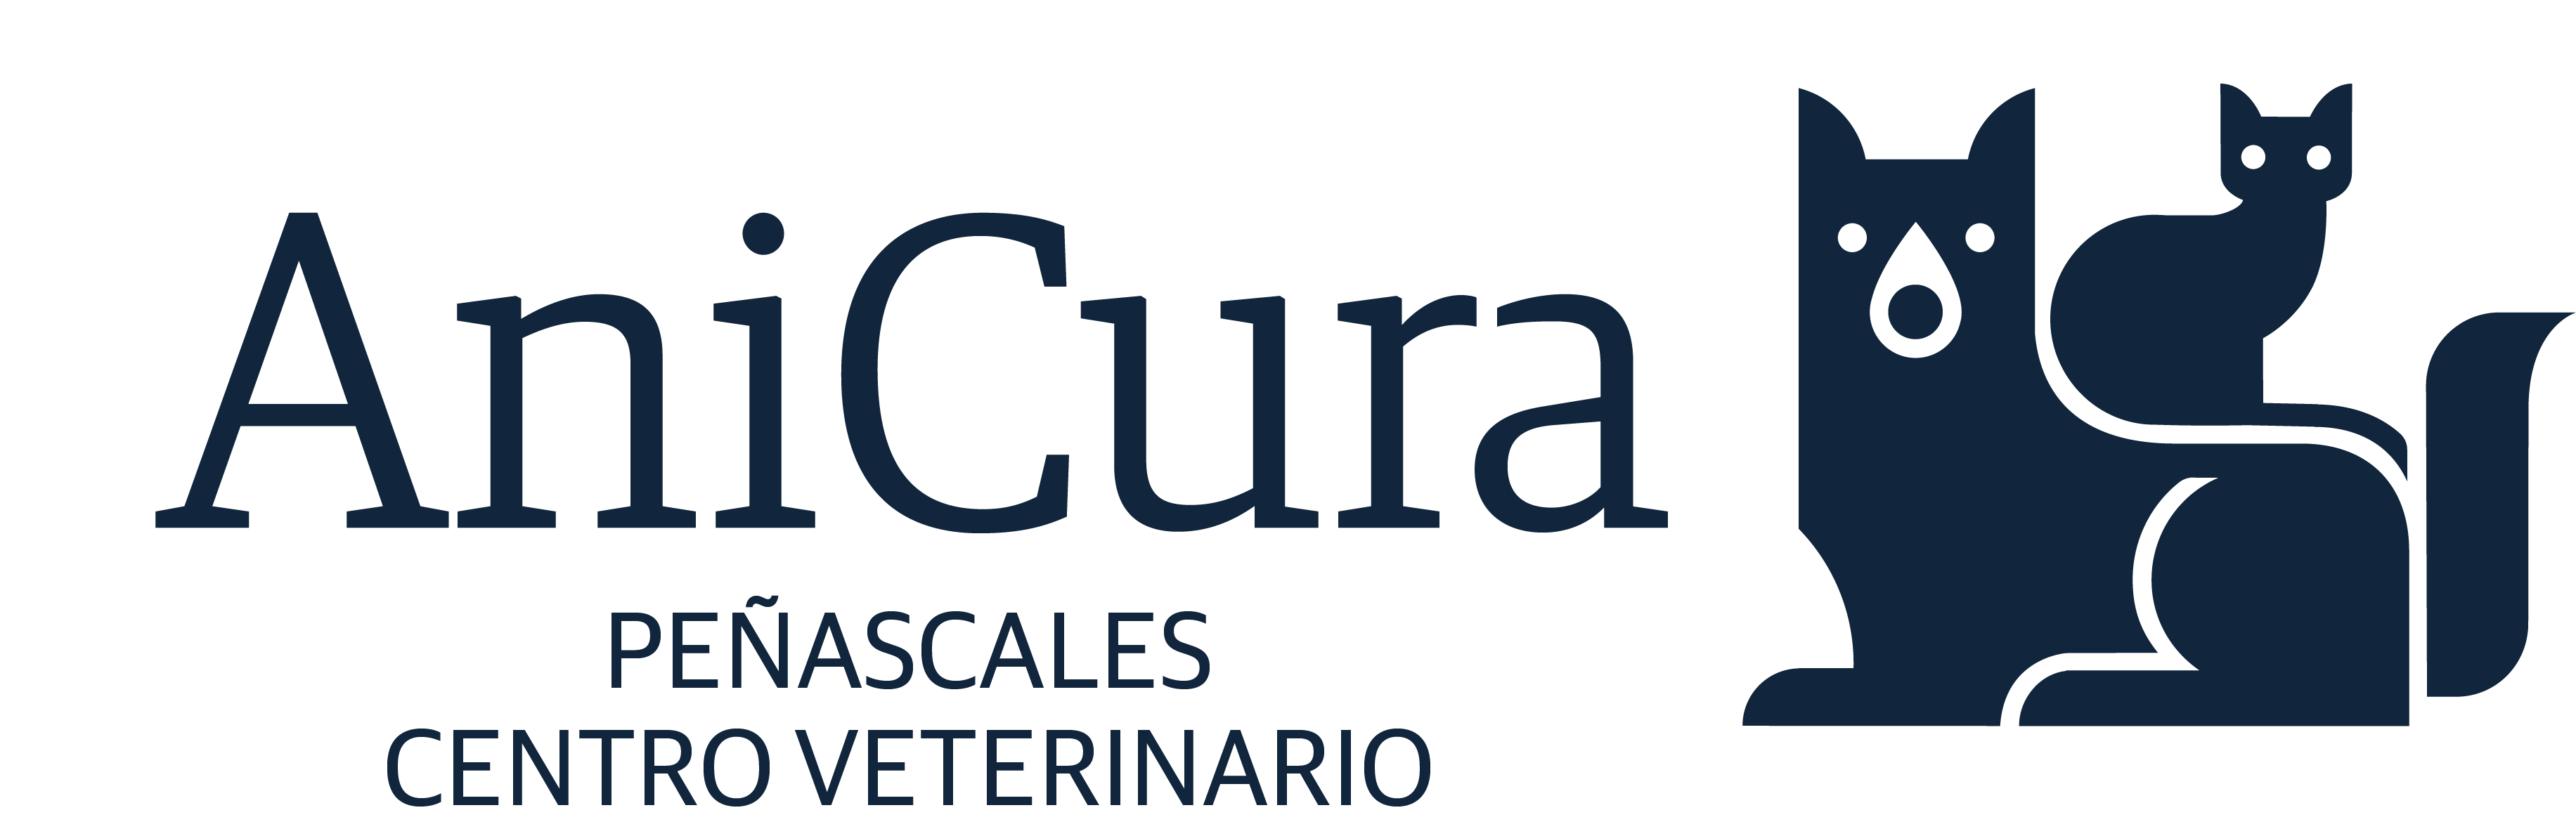 AniCura Peñascales Centro Veterinario logo